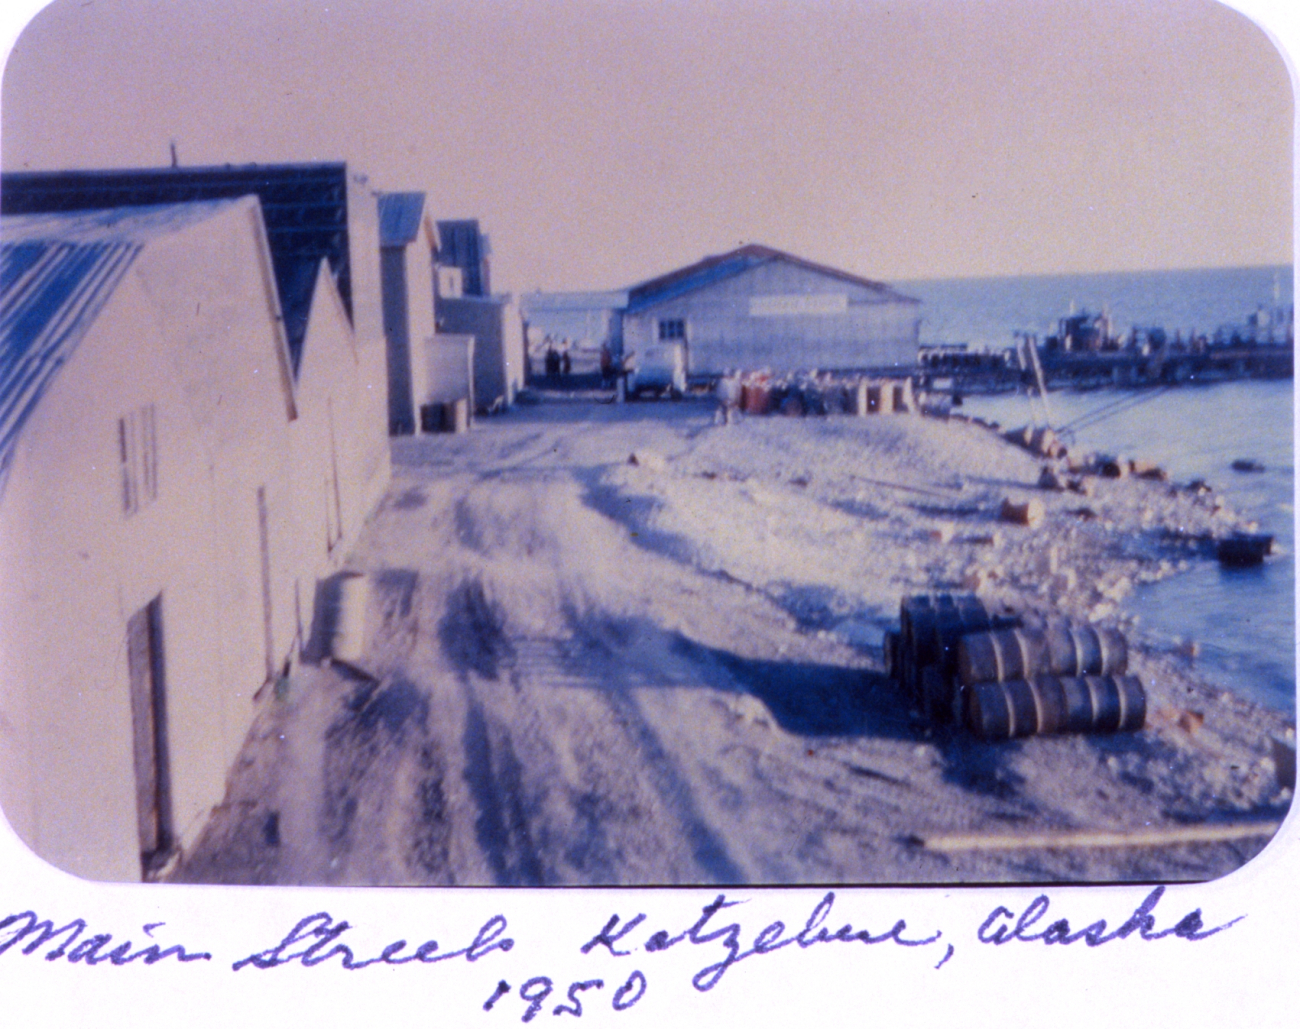 Main street of Kotzebue, Alaska in 1950